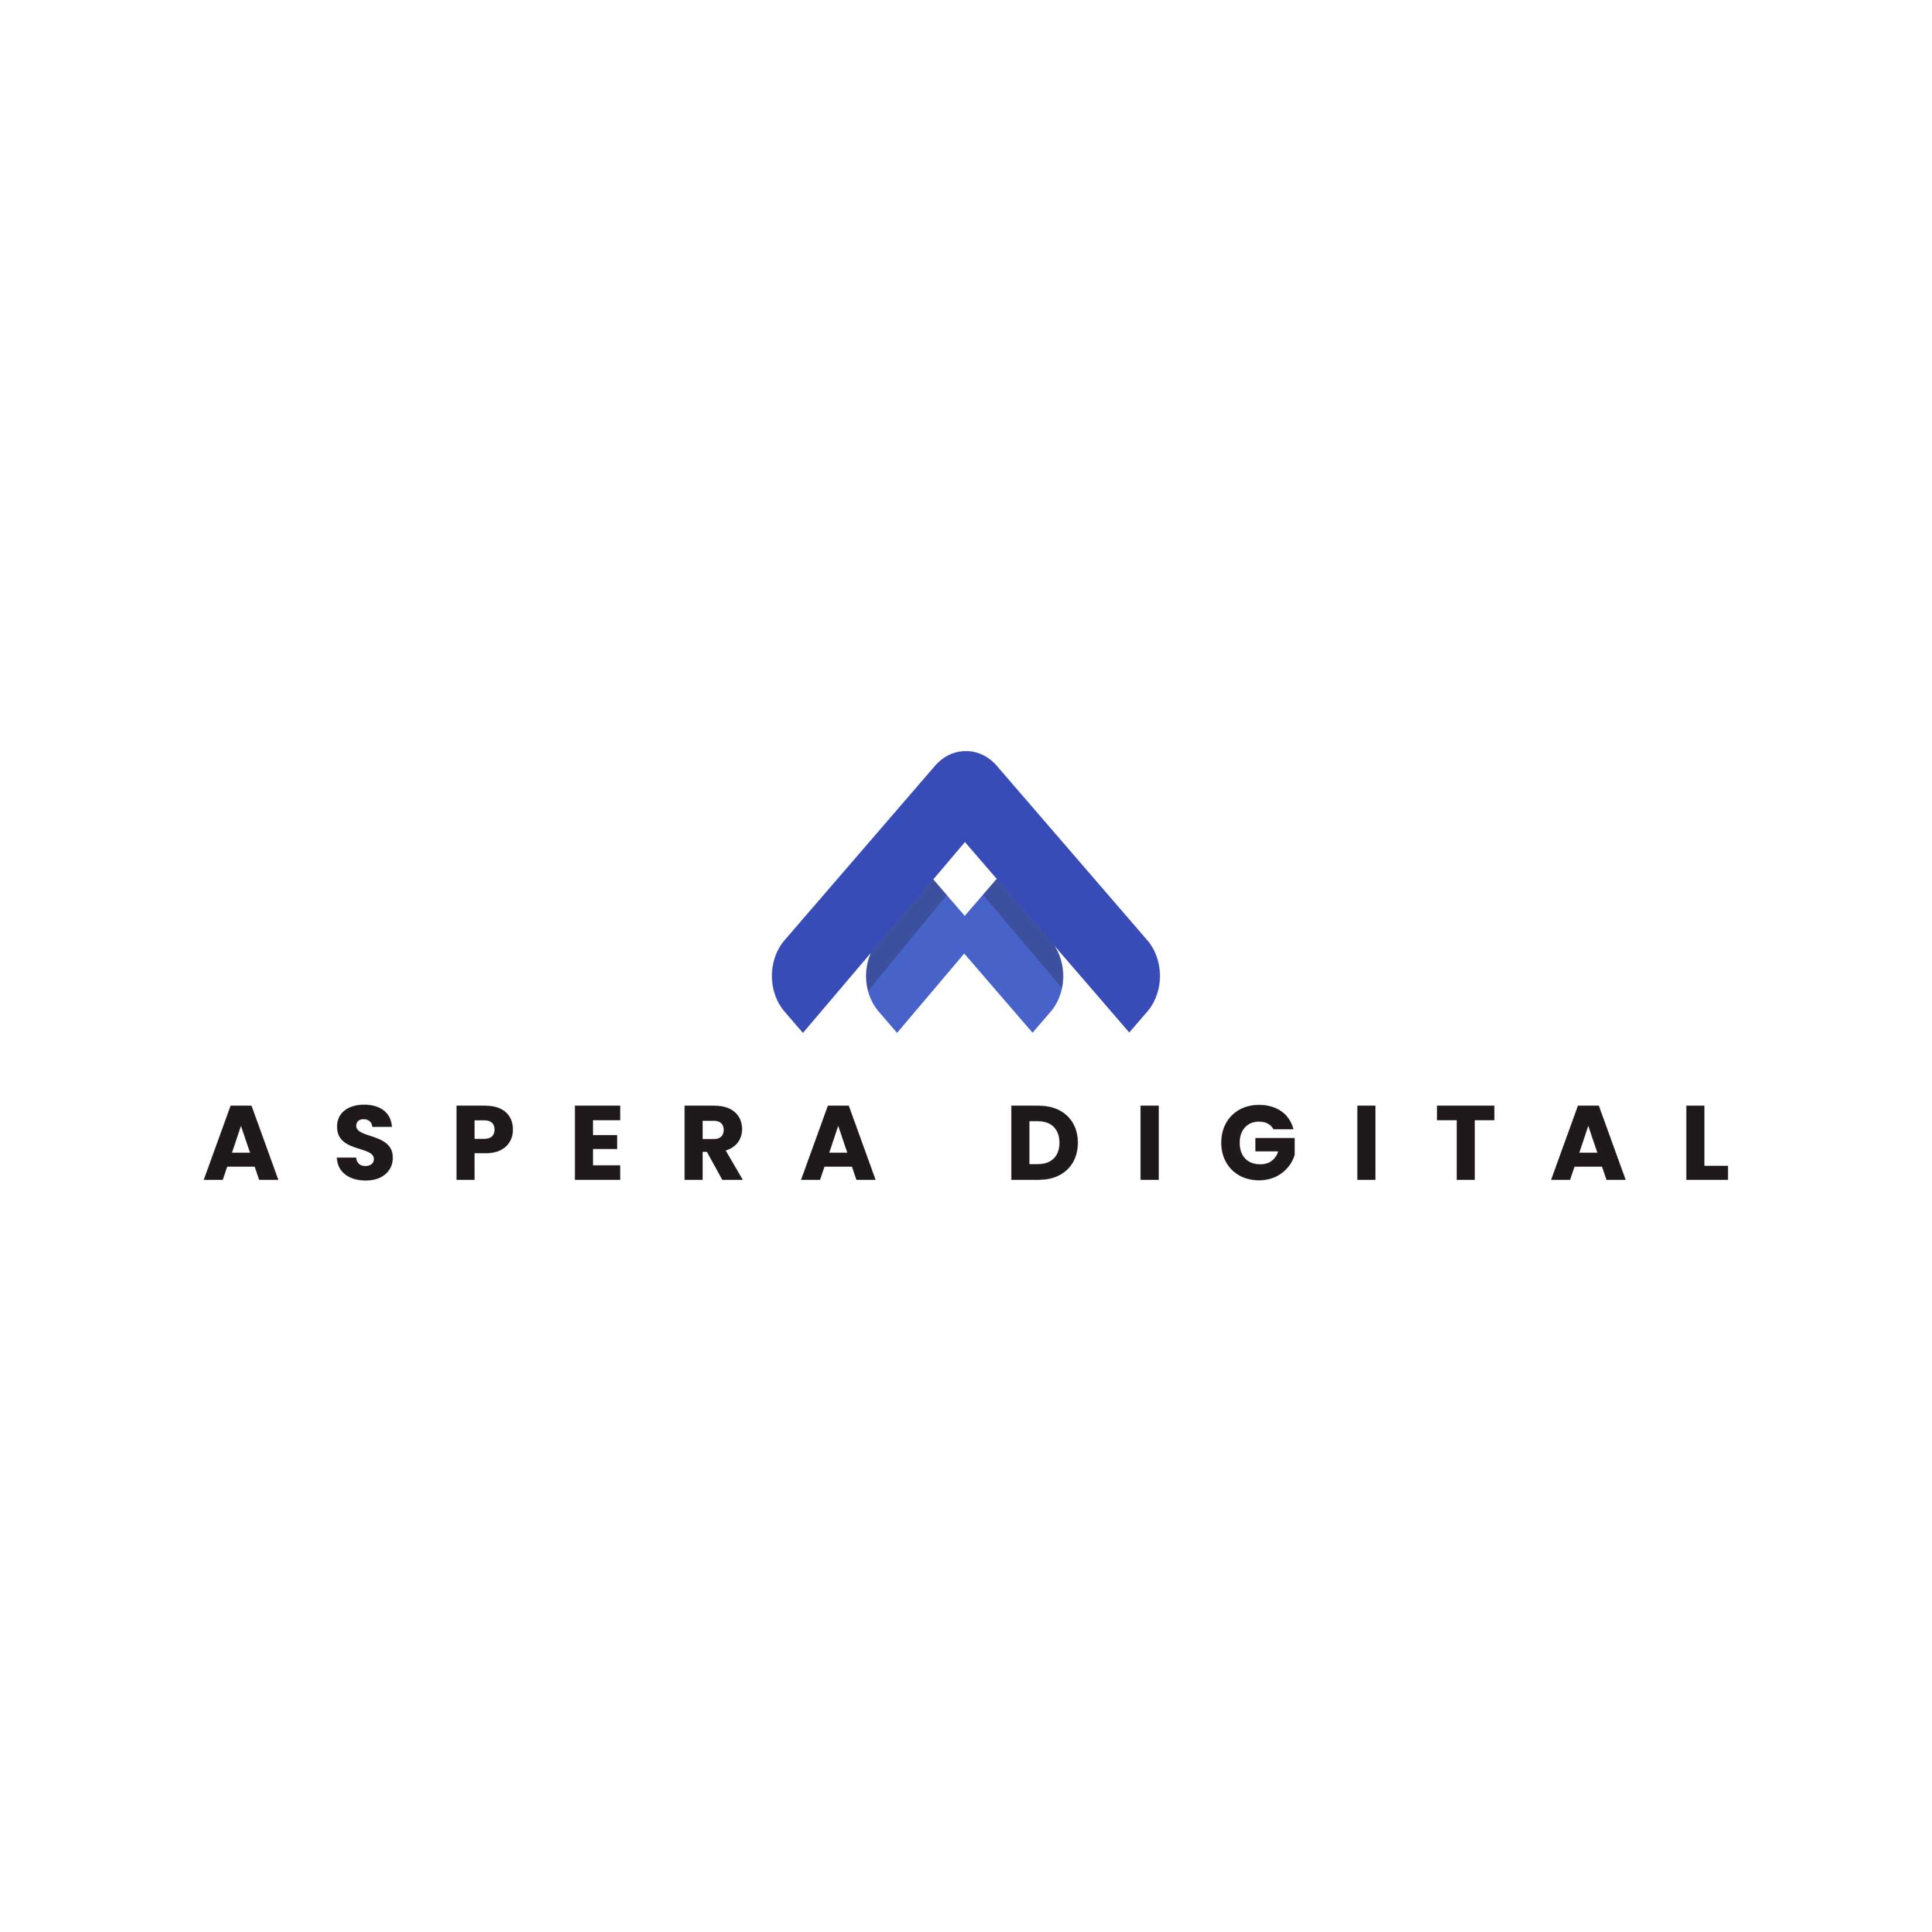 Aspera Digital ⇒ Digital marketing